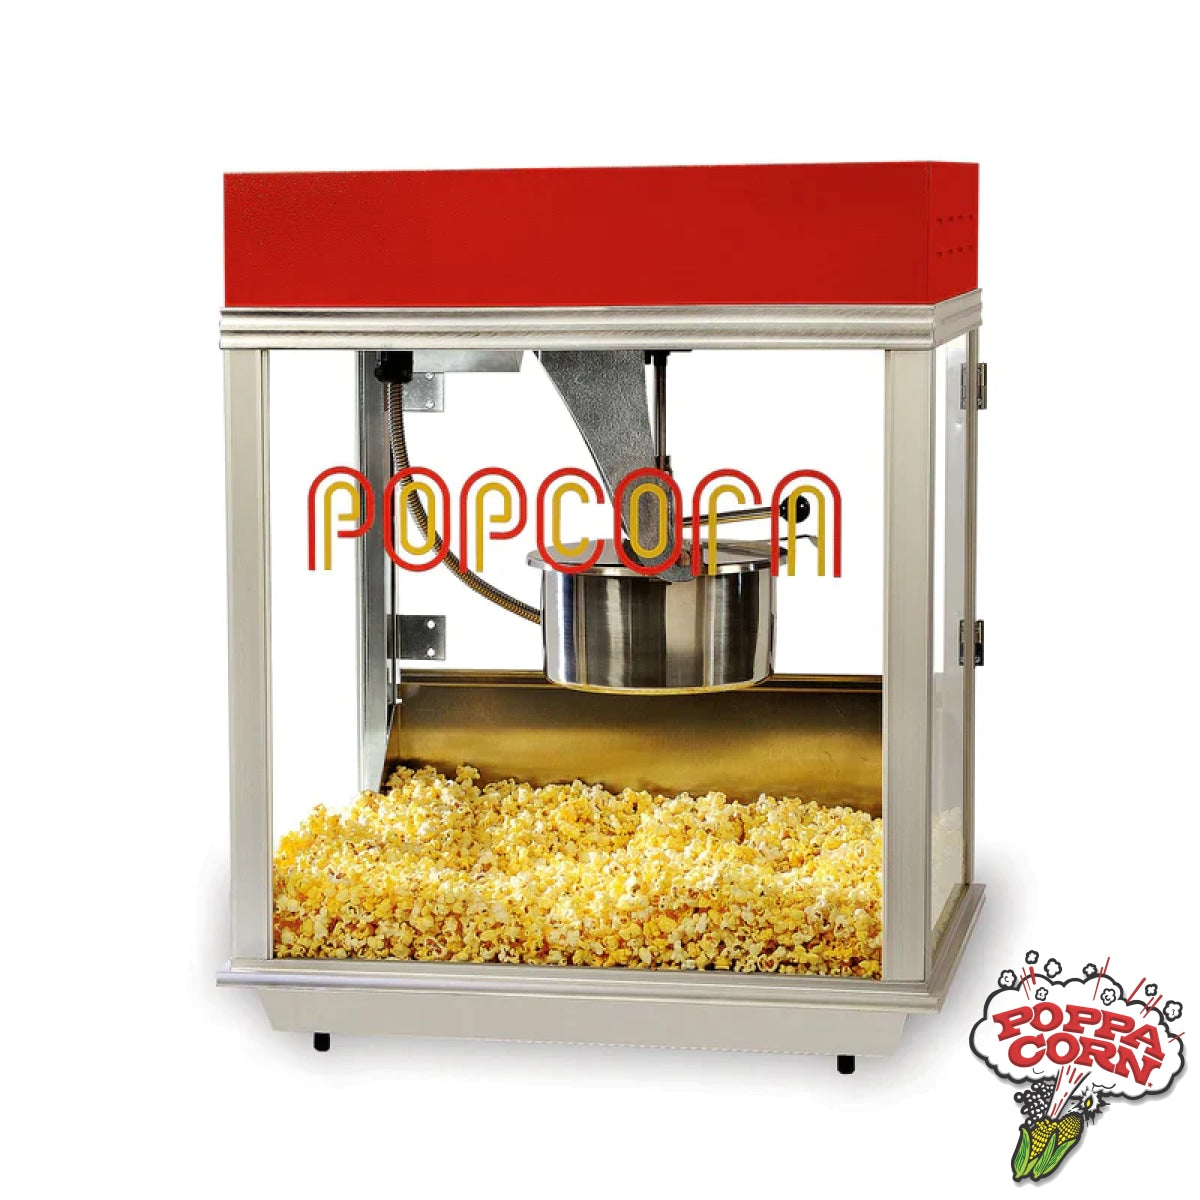 Econo 14 Popcorn Machine - Gm2121Nsu Demo Equipment